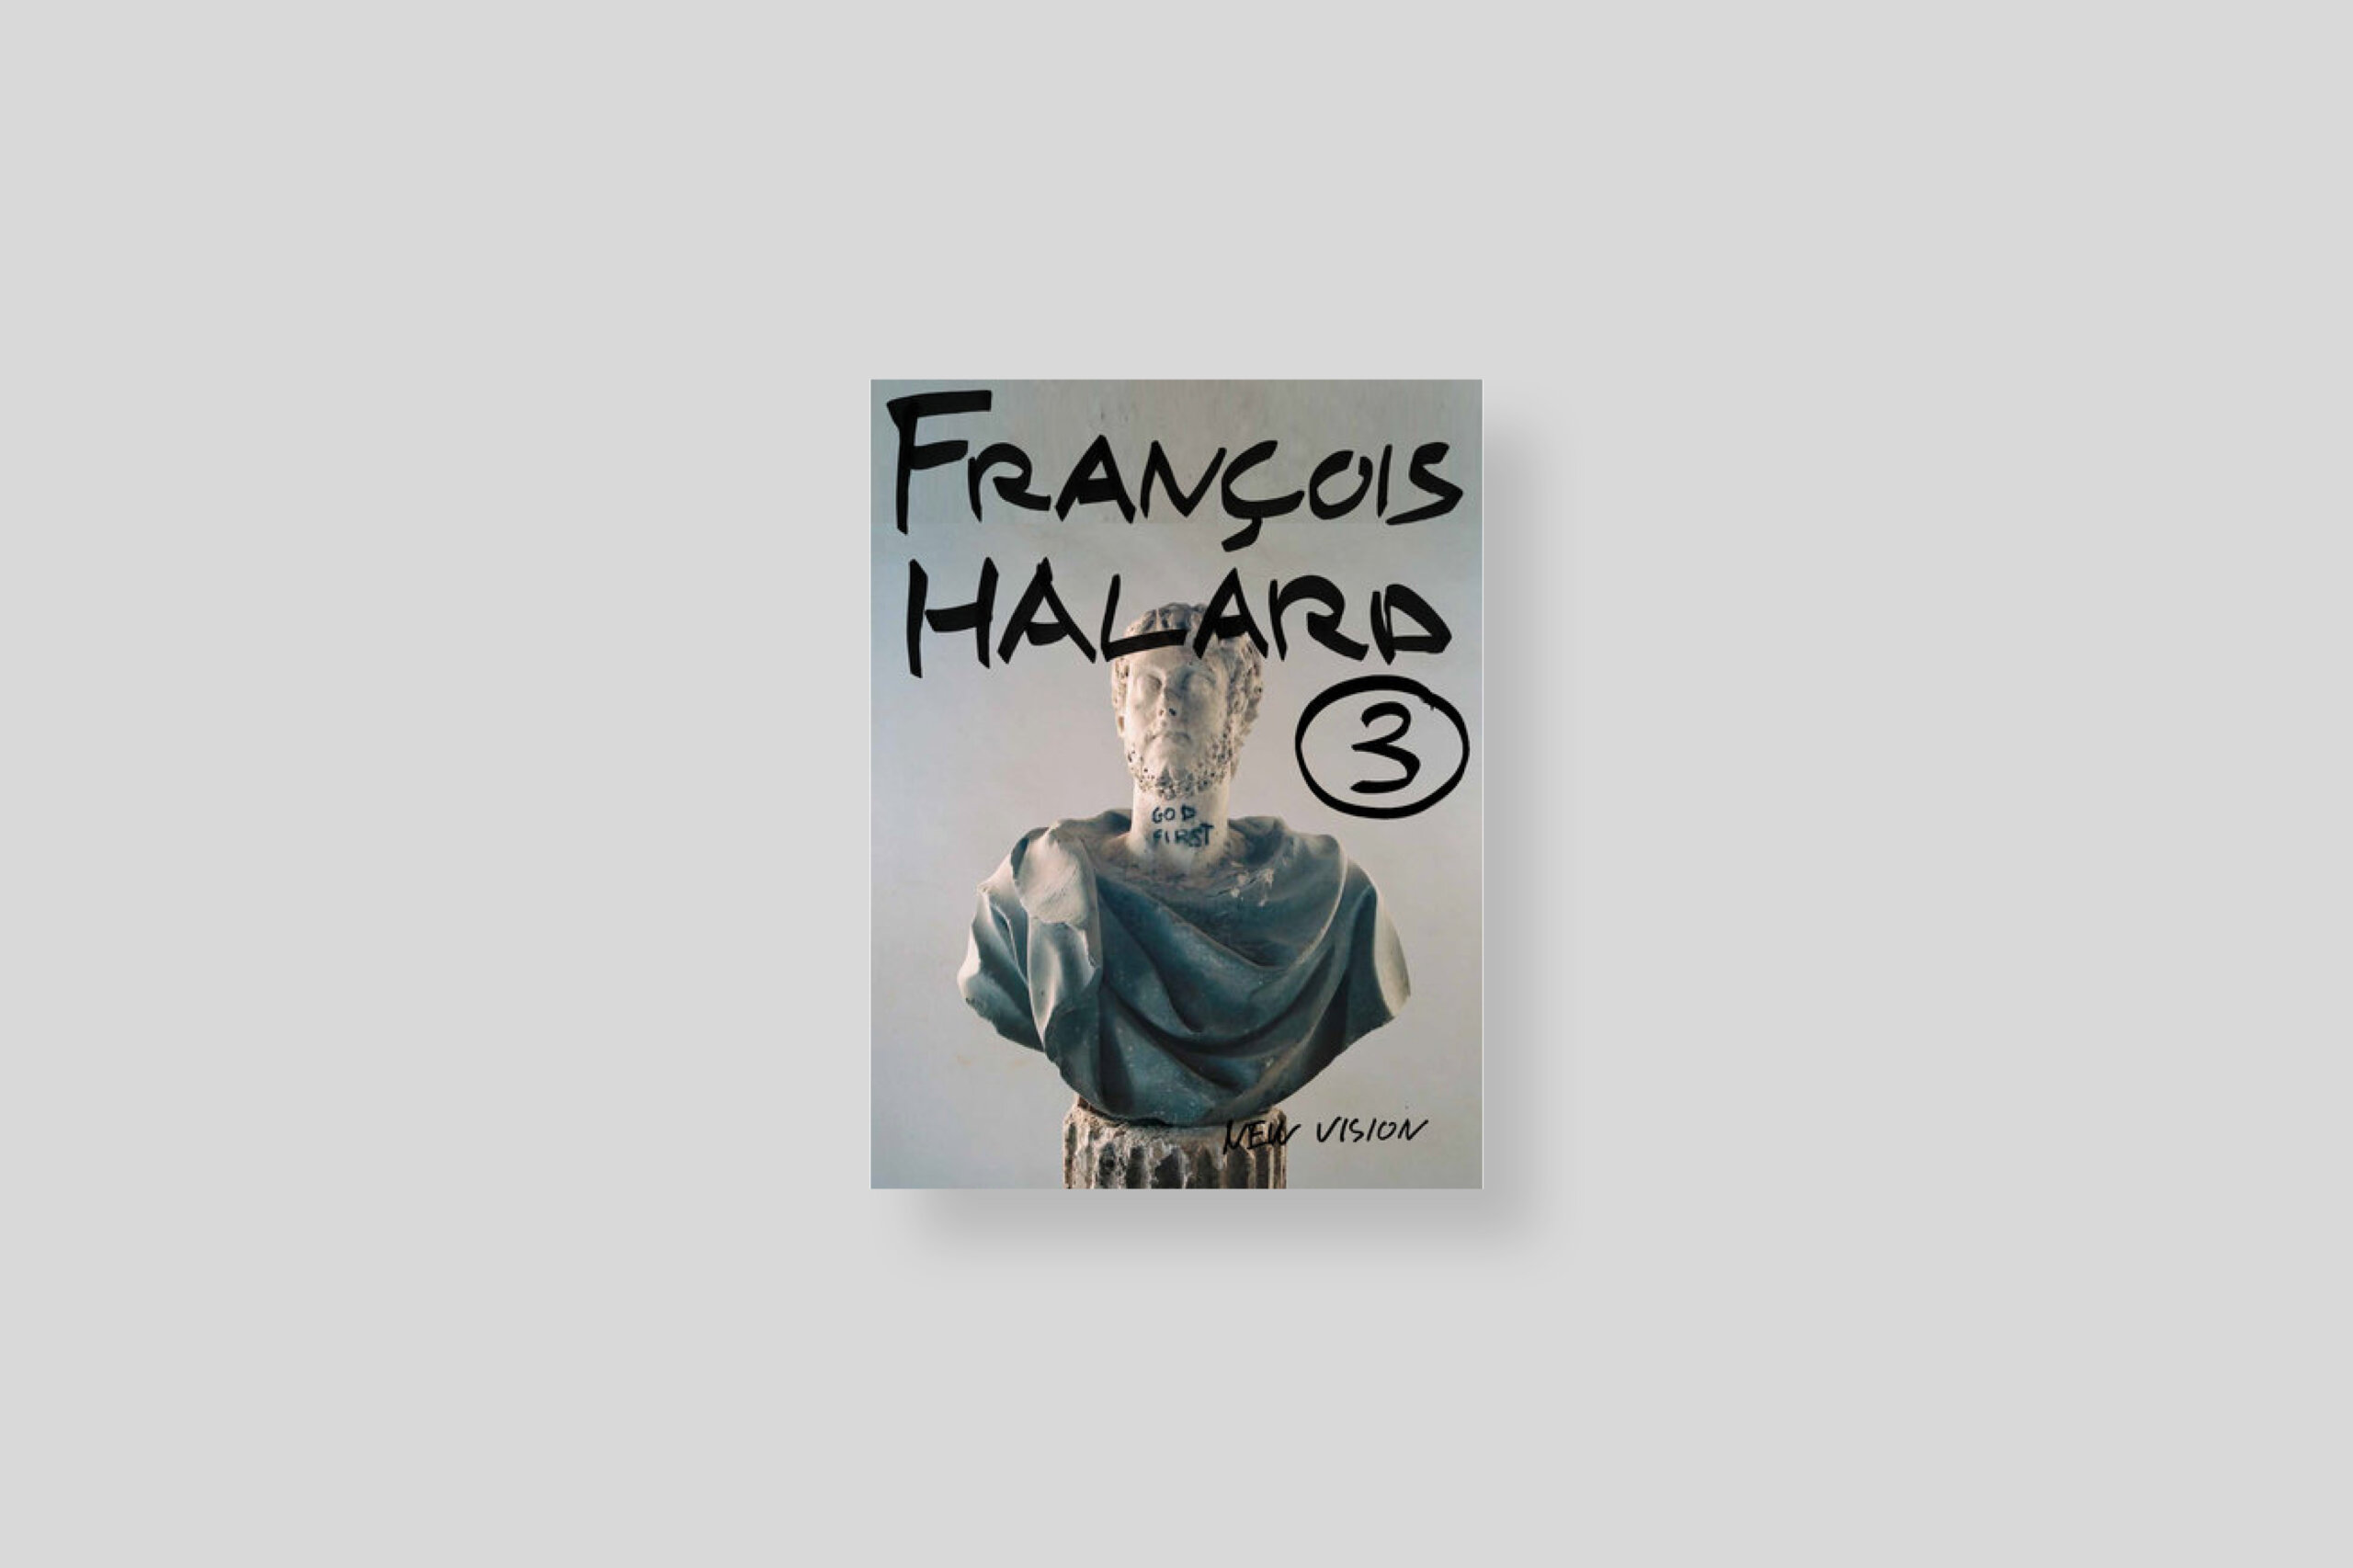 francois-halard-new-vision-rizzoli-cover